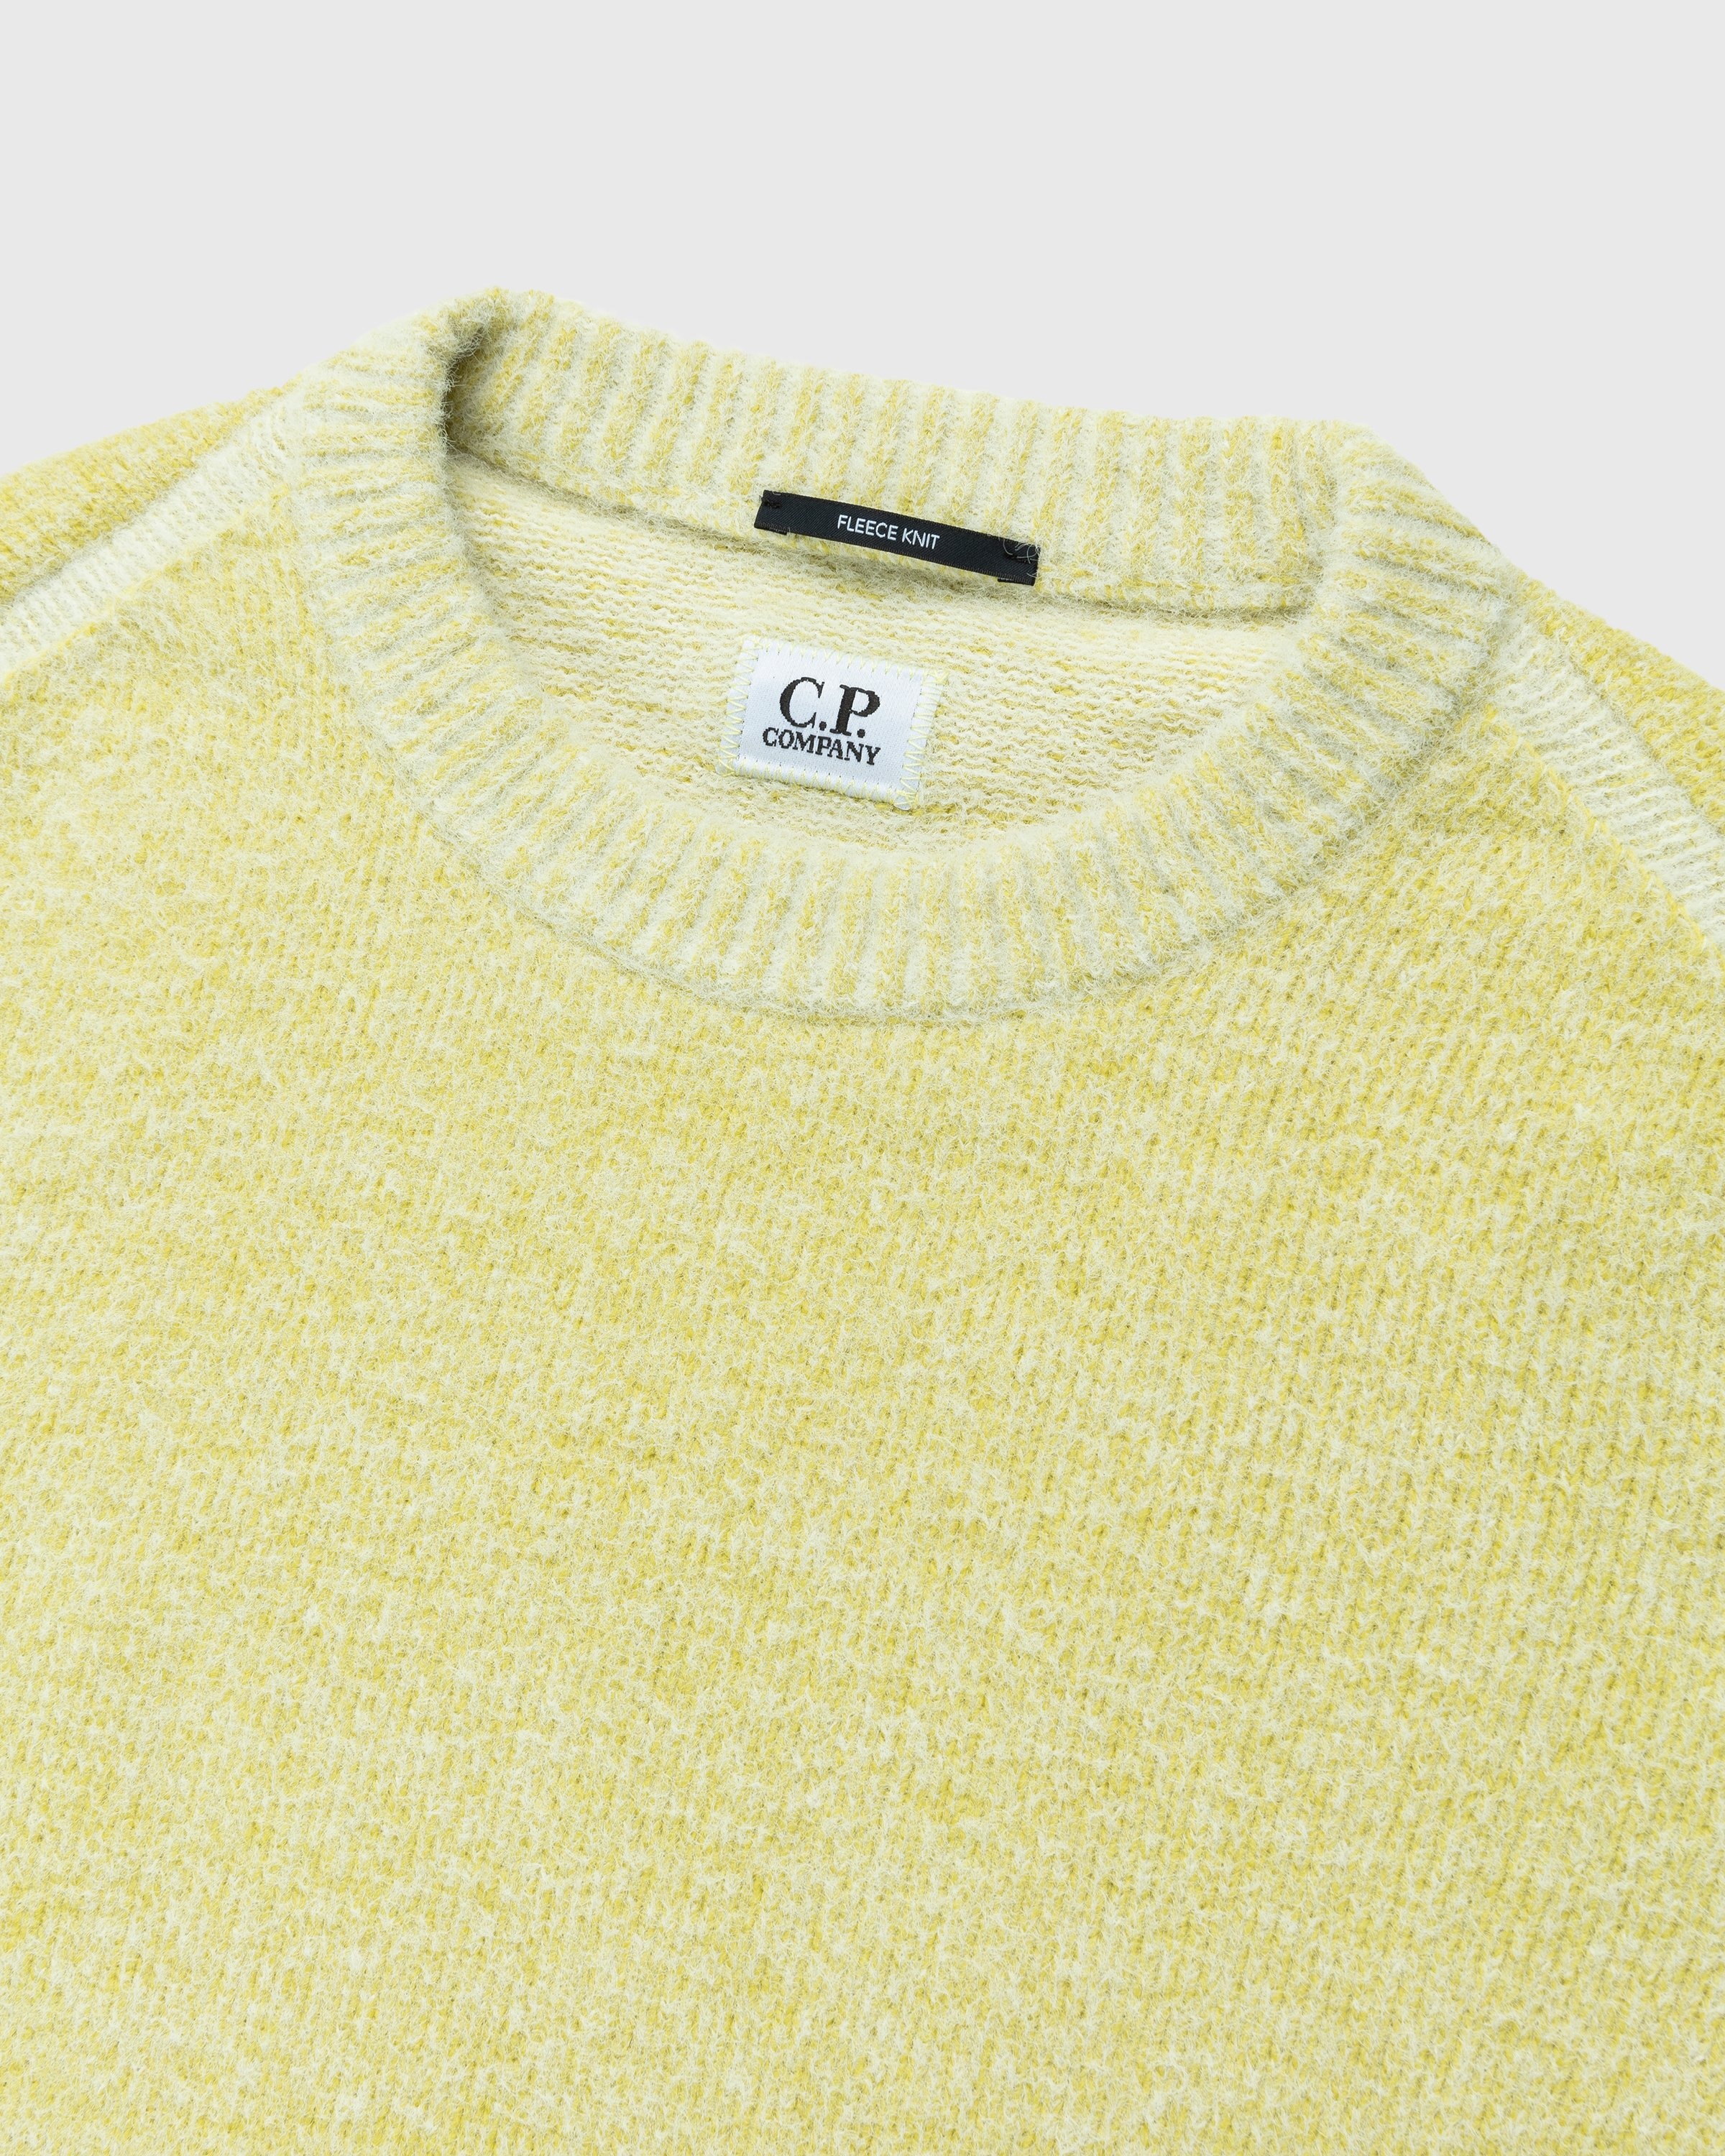 C.P. Company – Fleece Knit Jumper Yellow - Crewnecks - Yellow - Image 3